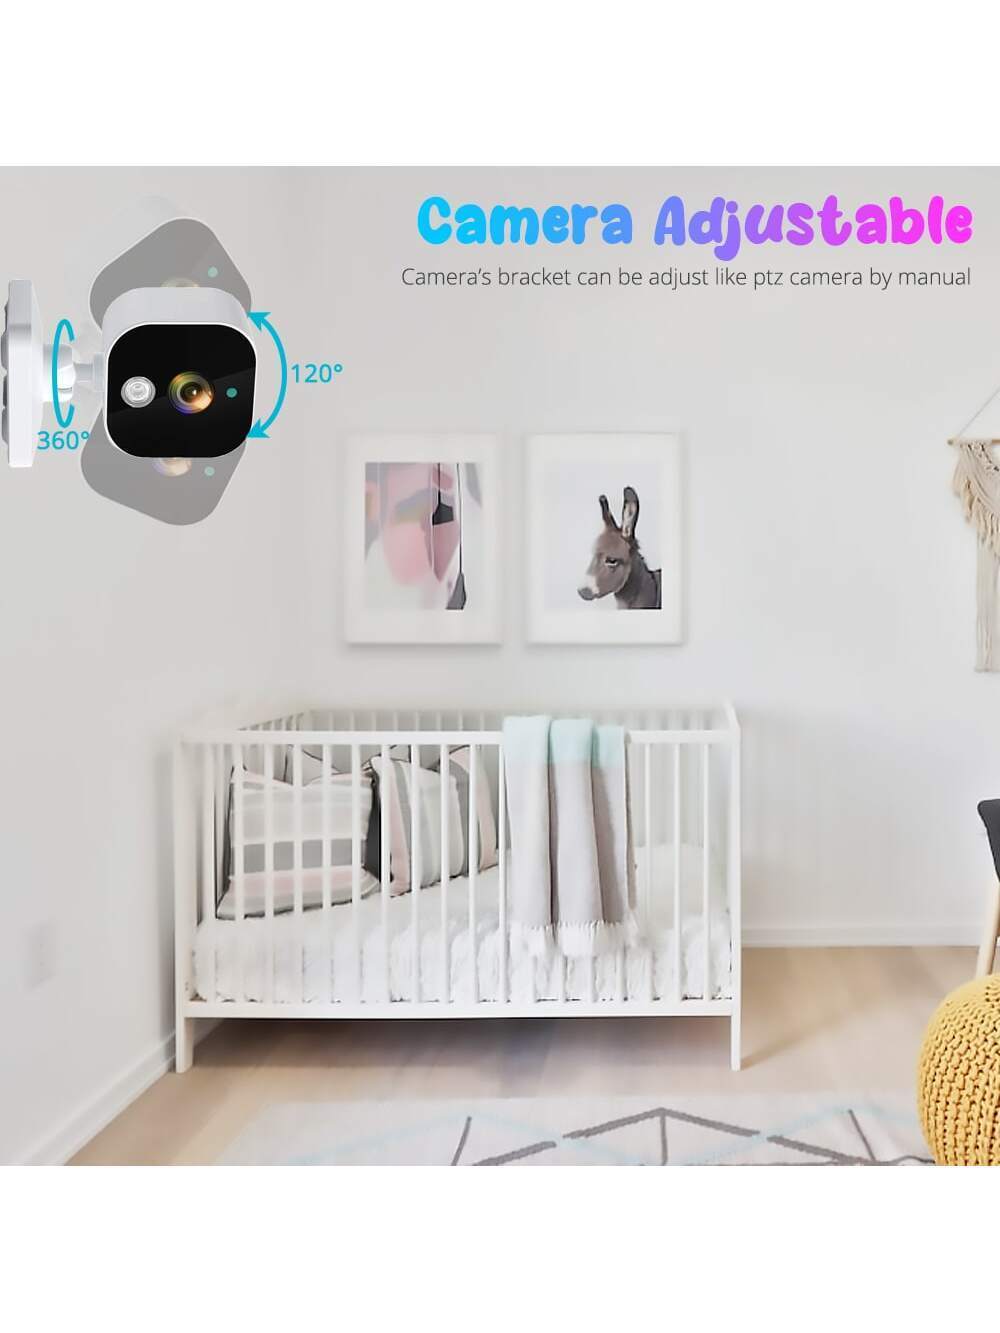 Baby Monitor with 2.8 HD Screen, 2.4Ghz Wireless Baby Camera Monitor, Infrared Night Vision, 2 Way Intercom, Room Temperature Monitoring, VoX Power Saving Mode (US Plug) - Buy Baby Monitor with 2.8 HD Screen, 2.4Ghz Wireless Baby Camera Monitor, Infrared 